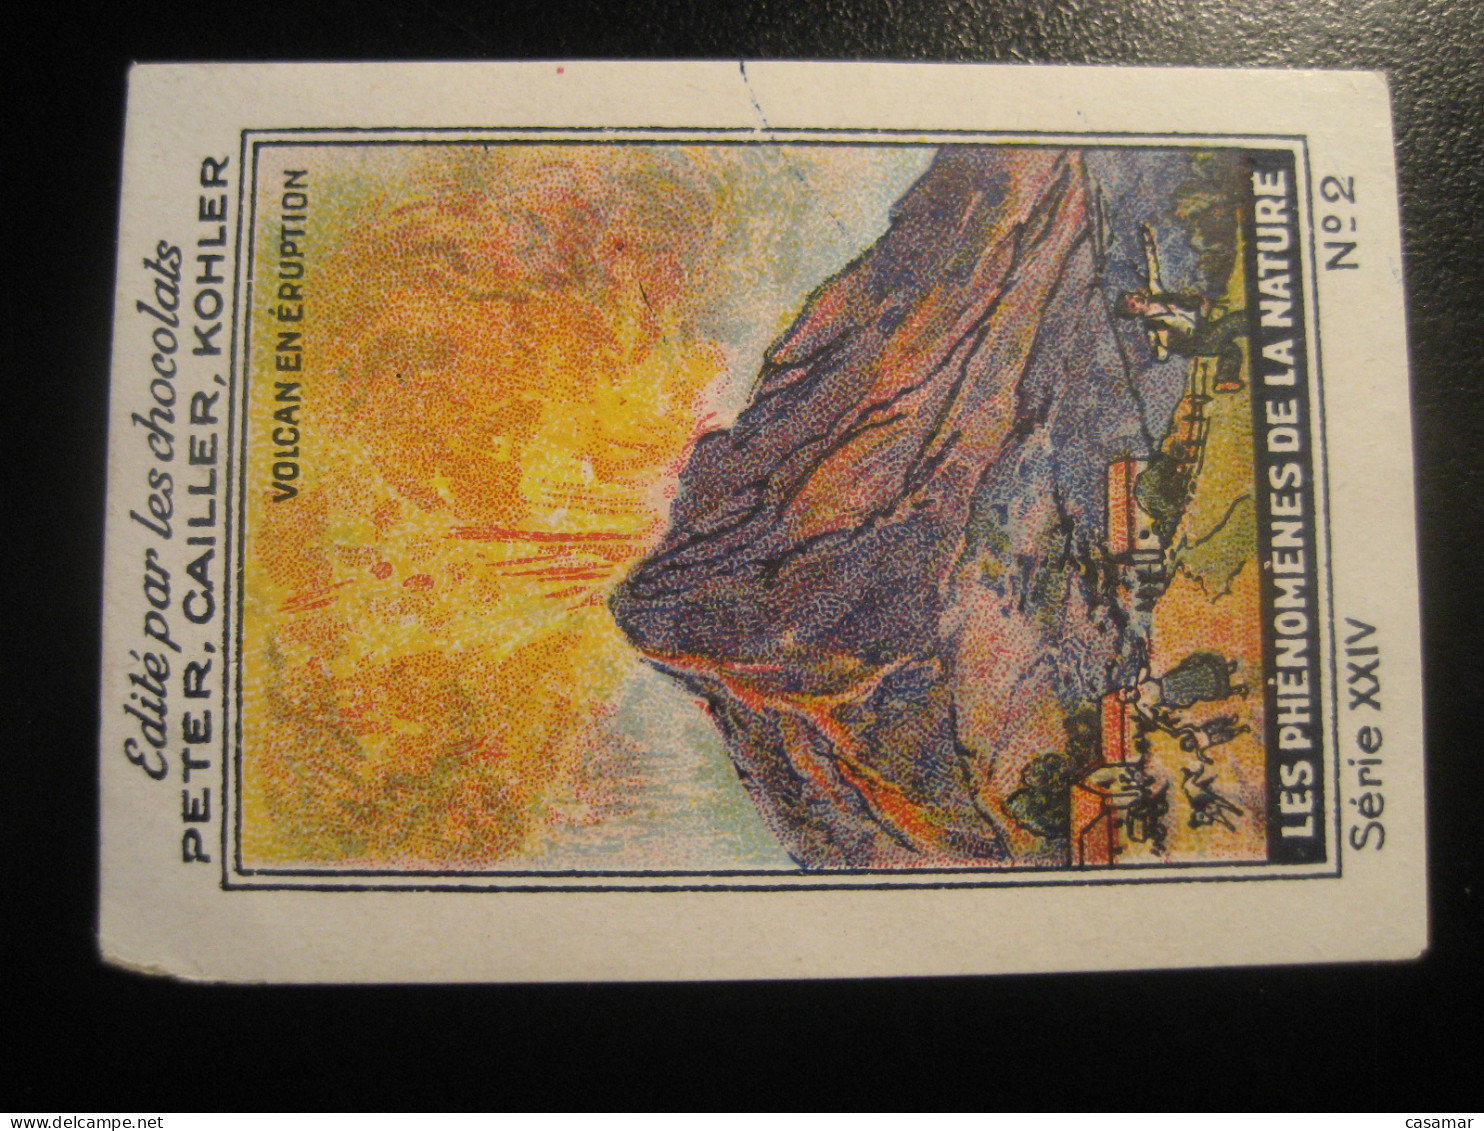 VOLCAN Volcano Geology Geologie Peter Cailler Kohler Nestle Chocolate Poster Stamp Vignette SWITZERLAND Cinderella Label - Volcans